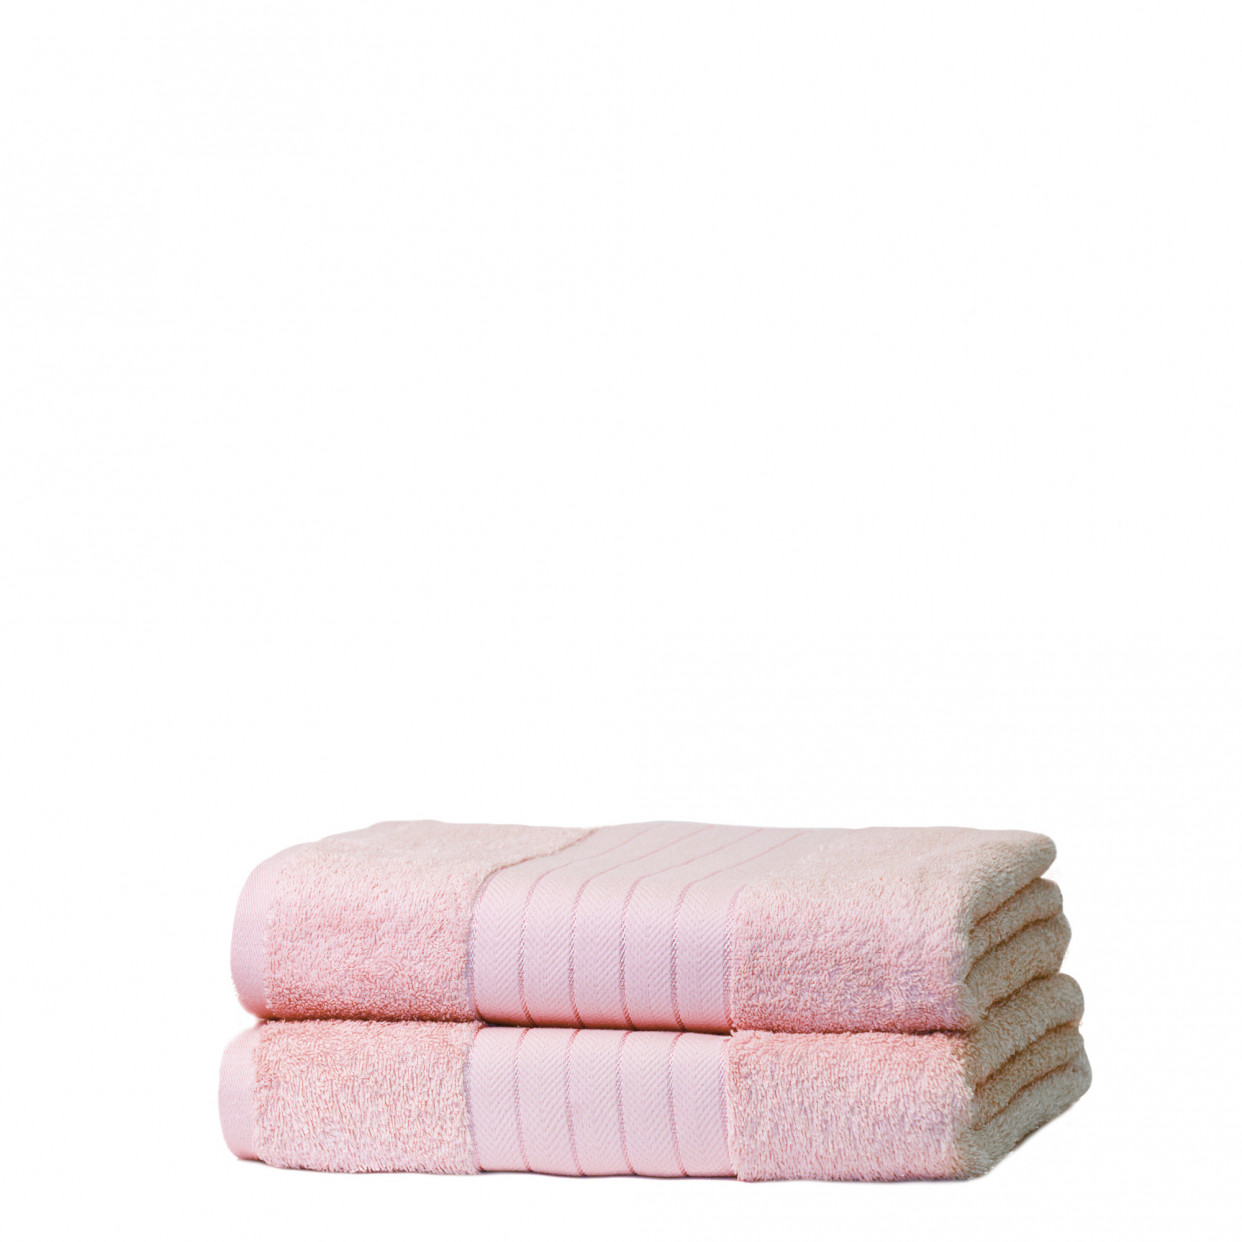 Luxury 100% Cotton 2 Jumbo Bath Sheets Large Towels Bale - Light Pink>